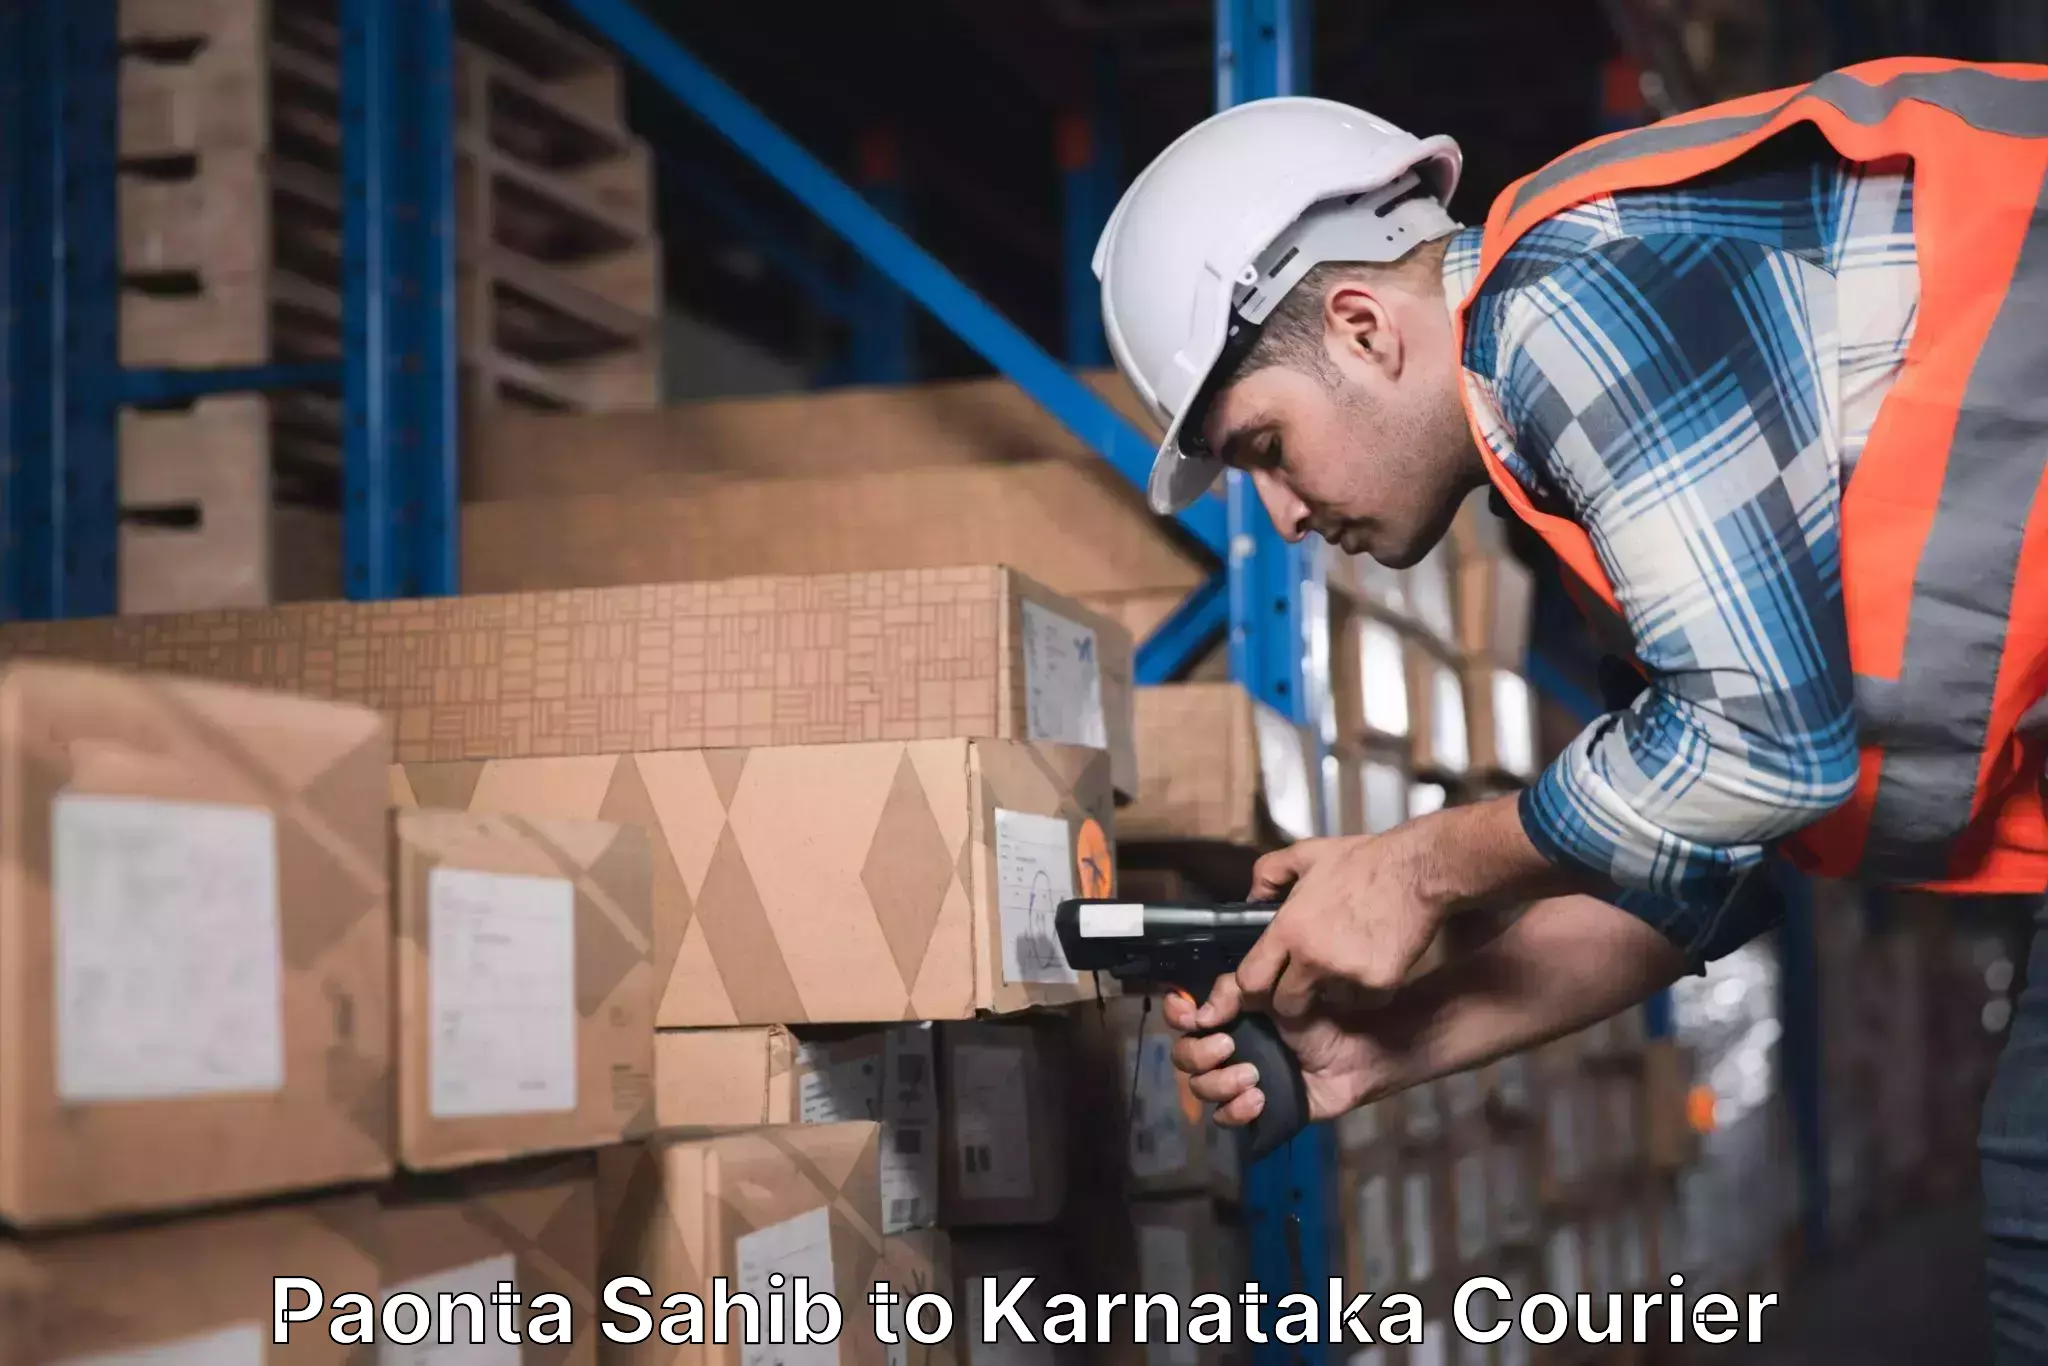 Courier service partnerships Paonta Sahib to Mundgod